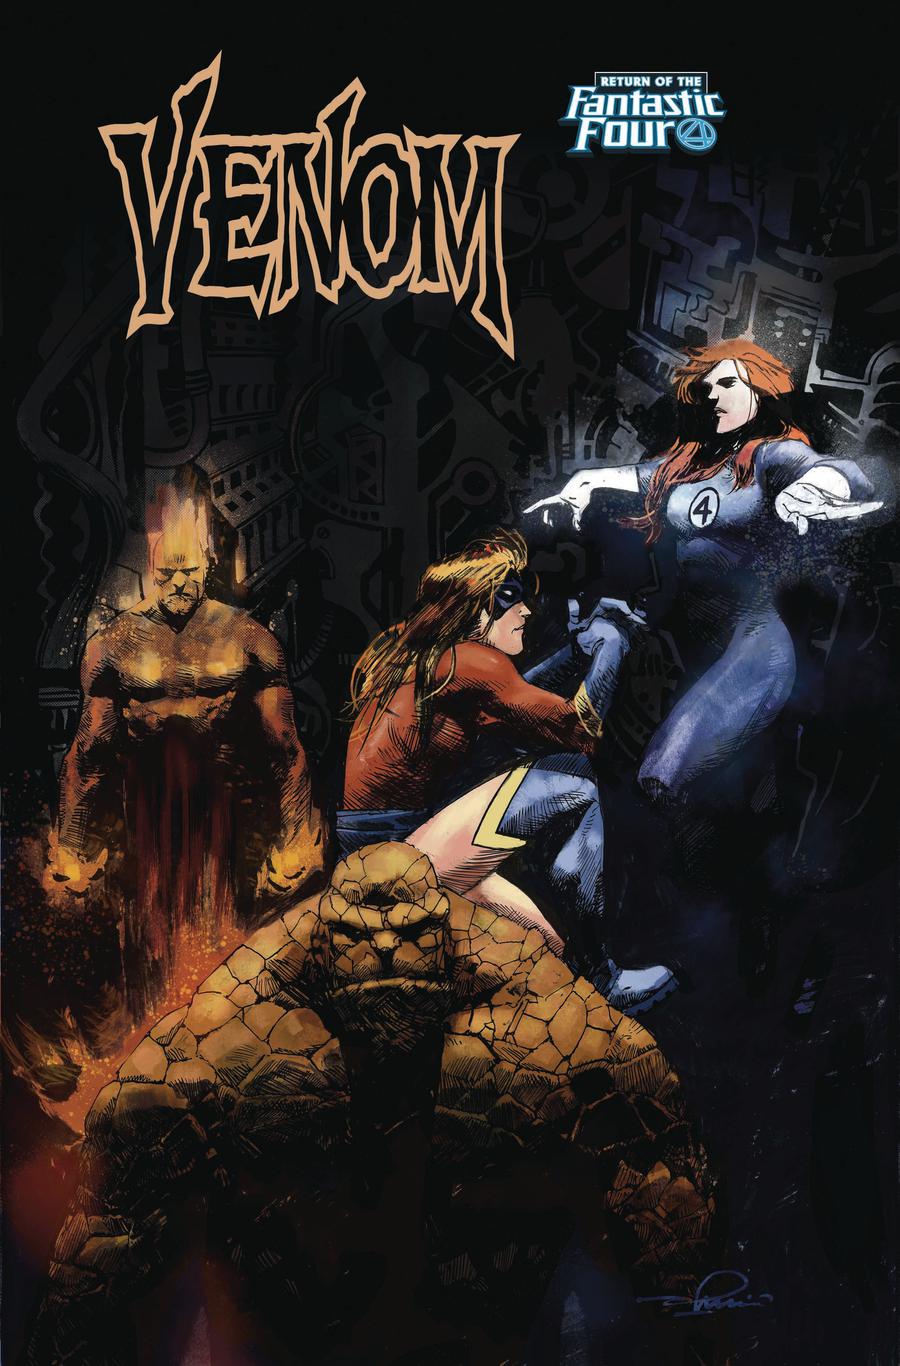 Venom Vol 4 #5 Cover B Variant Gerardo Zaffino Return Of The Fantastic Four Cover